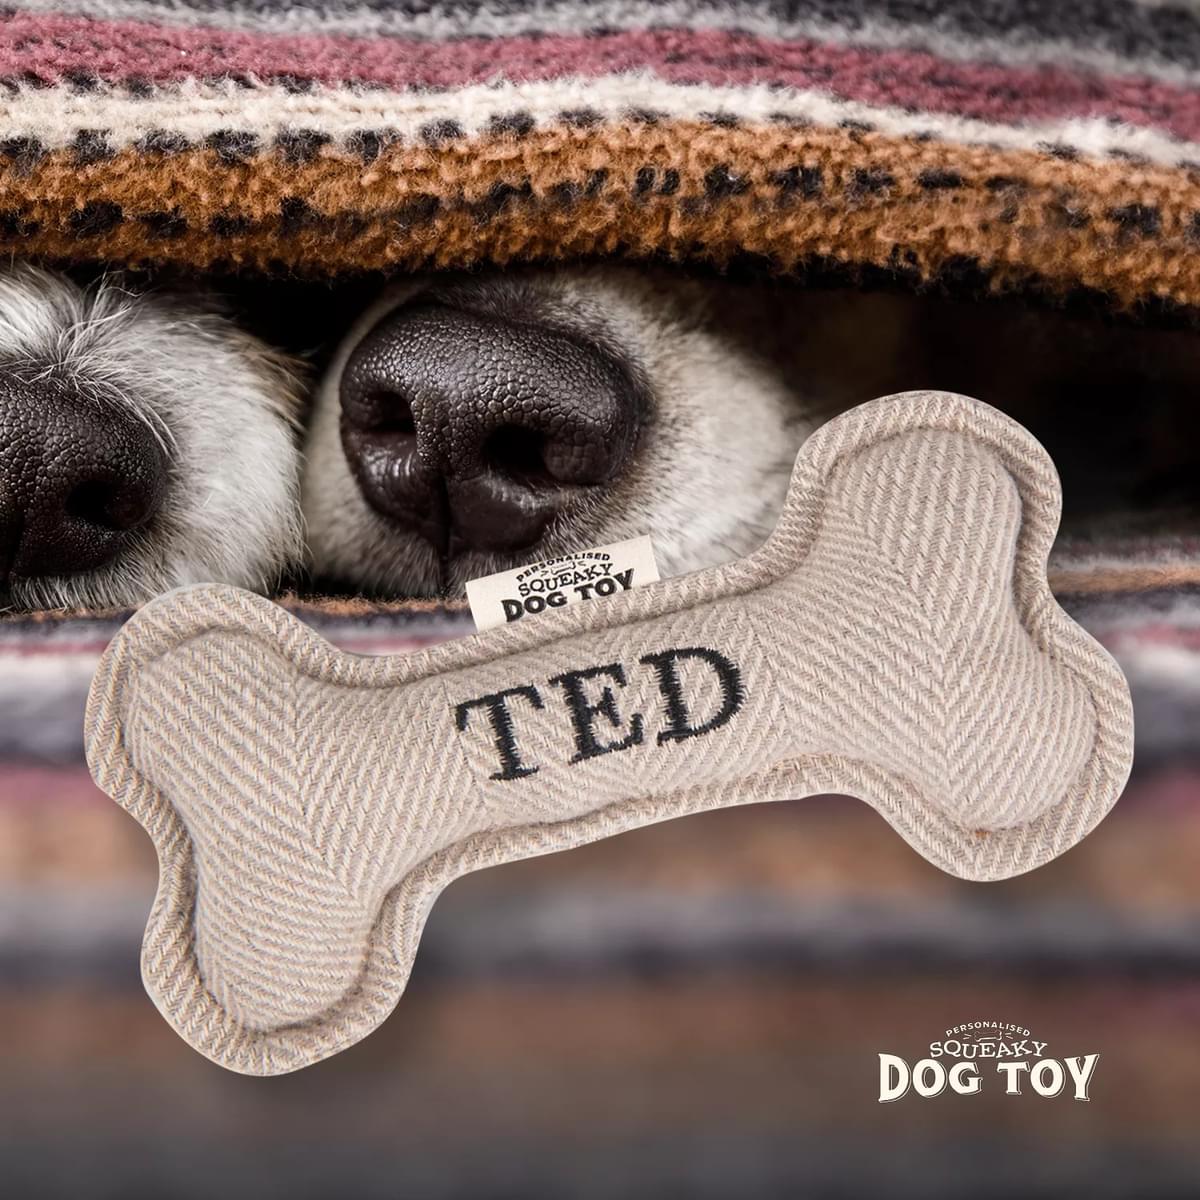 Named Squeaky Dog Toy- Ted. Bone shaped herringbone tweed pattern dog toy. 